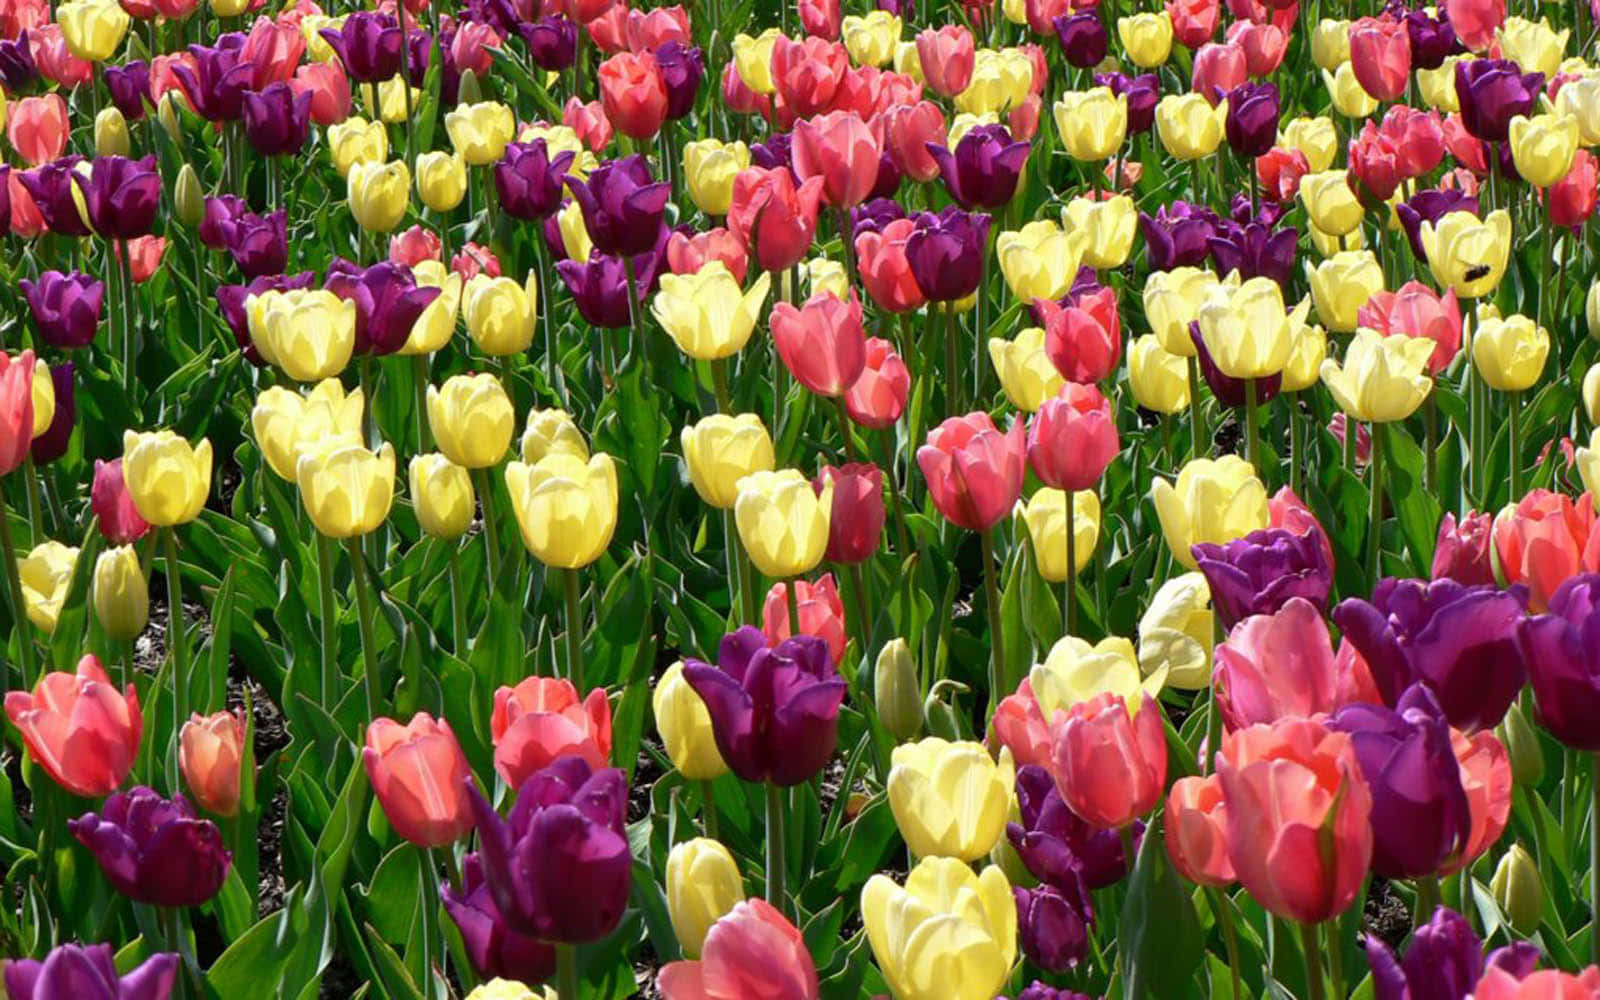 Fondode Pantalla De Flores De Primavera Con Tulipanes De Colores En Un Campo.